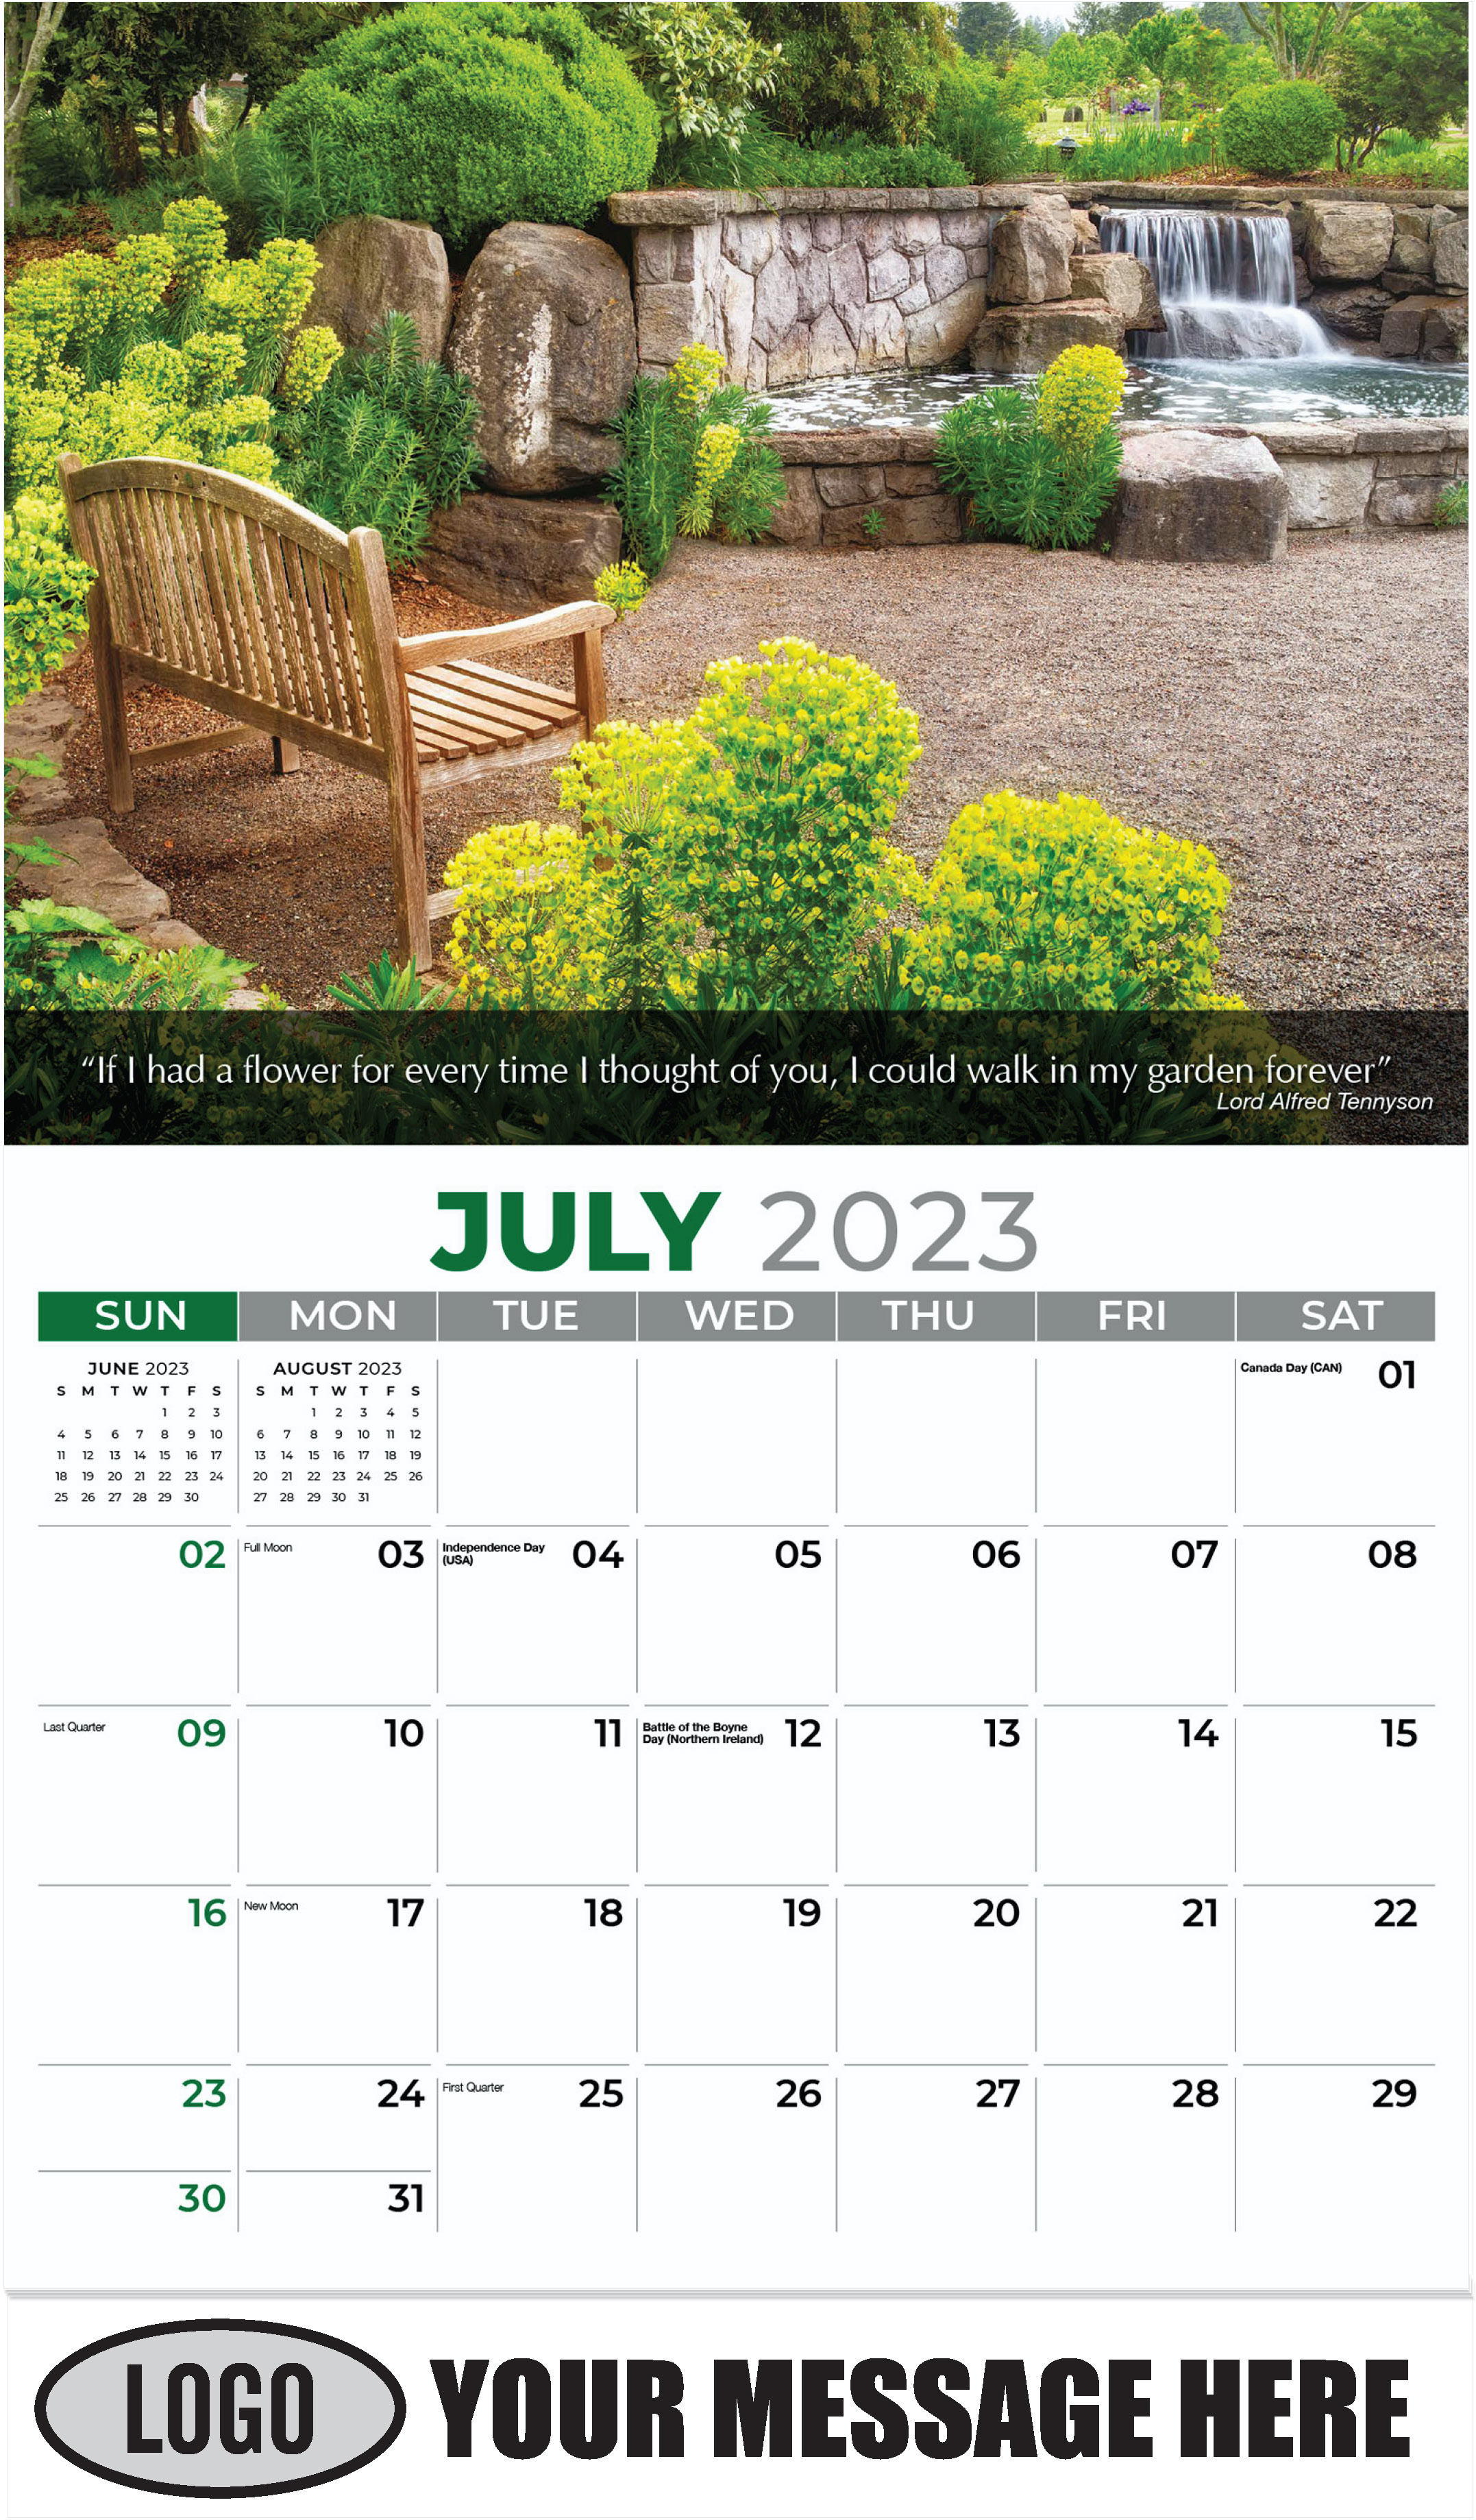 Mediterranean Spurge Garden - July - Flowers & Gardens 2023 Promotional Calendar